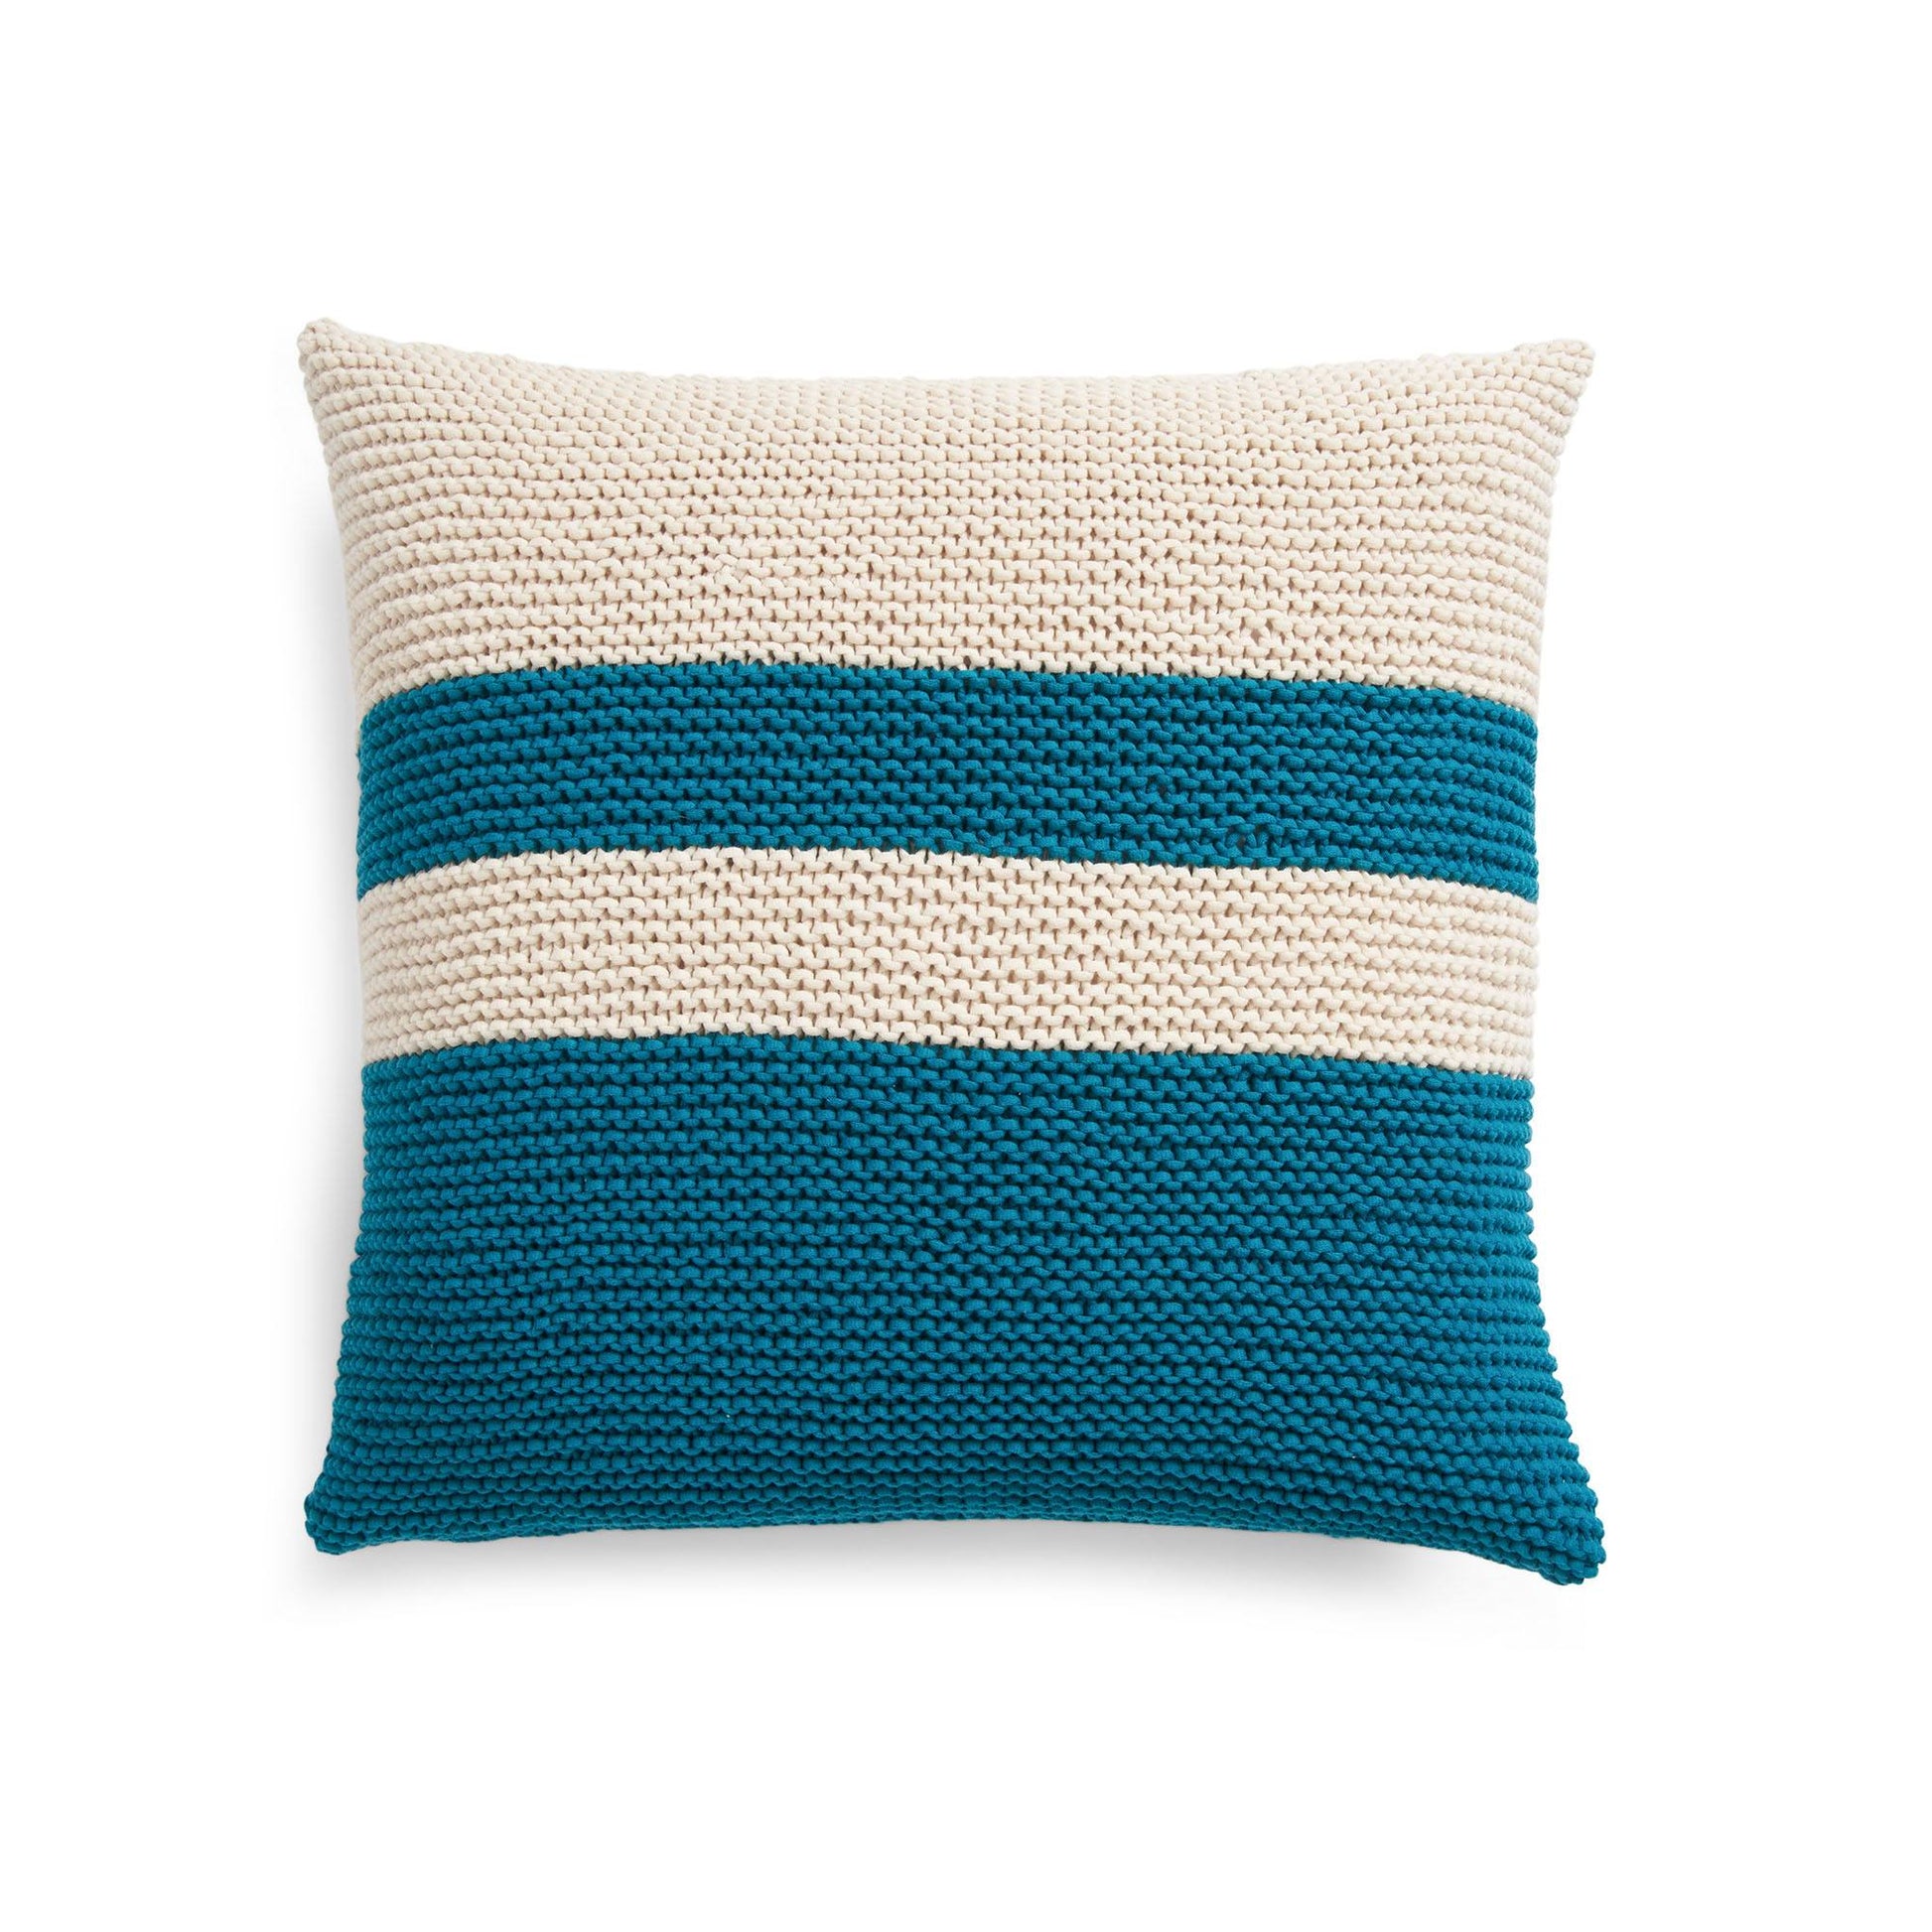 Free Bernat Knit Square Beginner Pillow Pattern